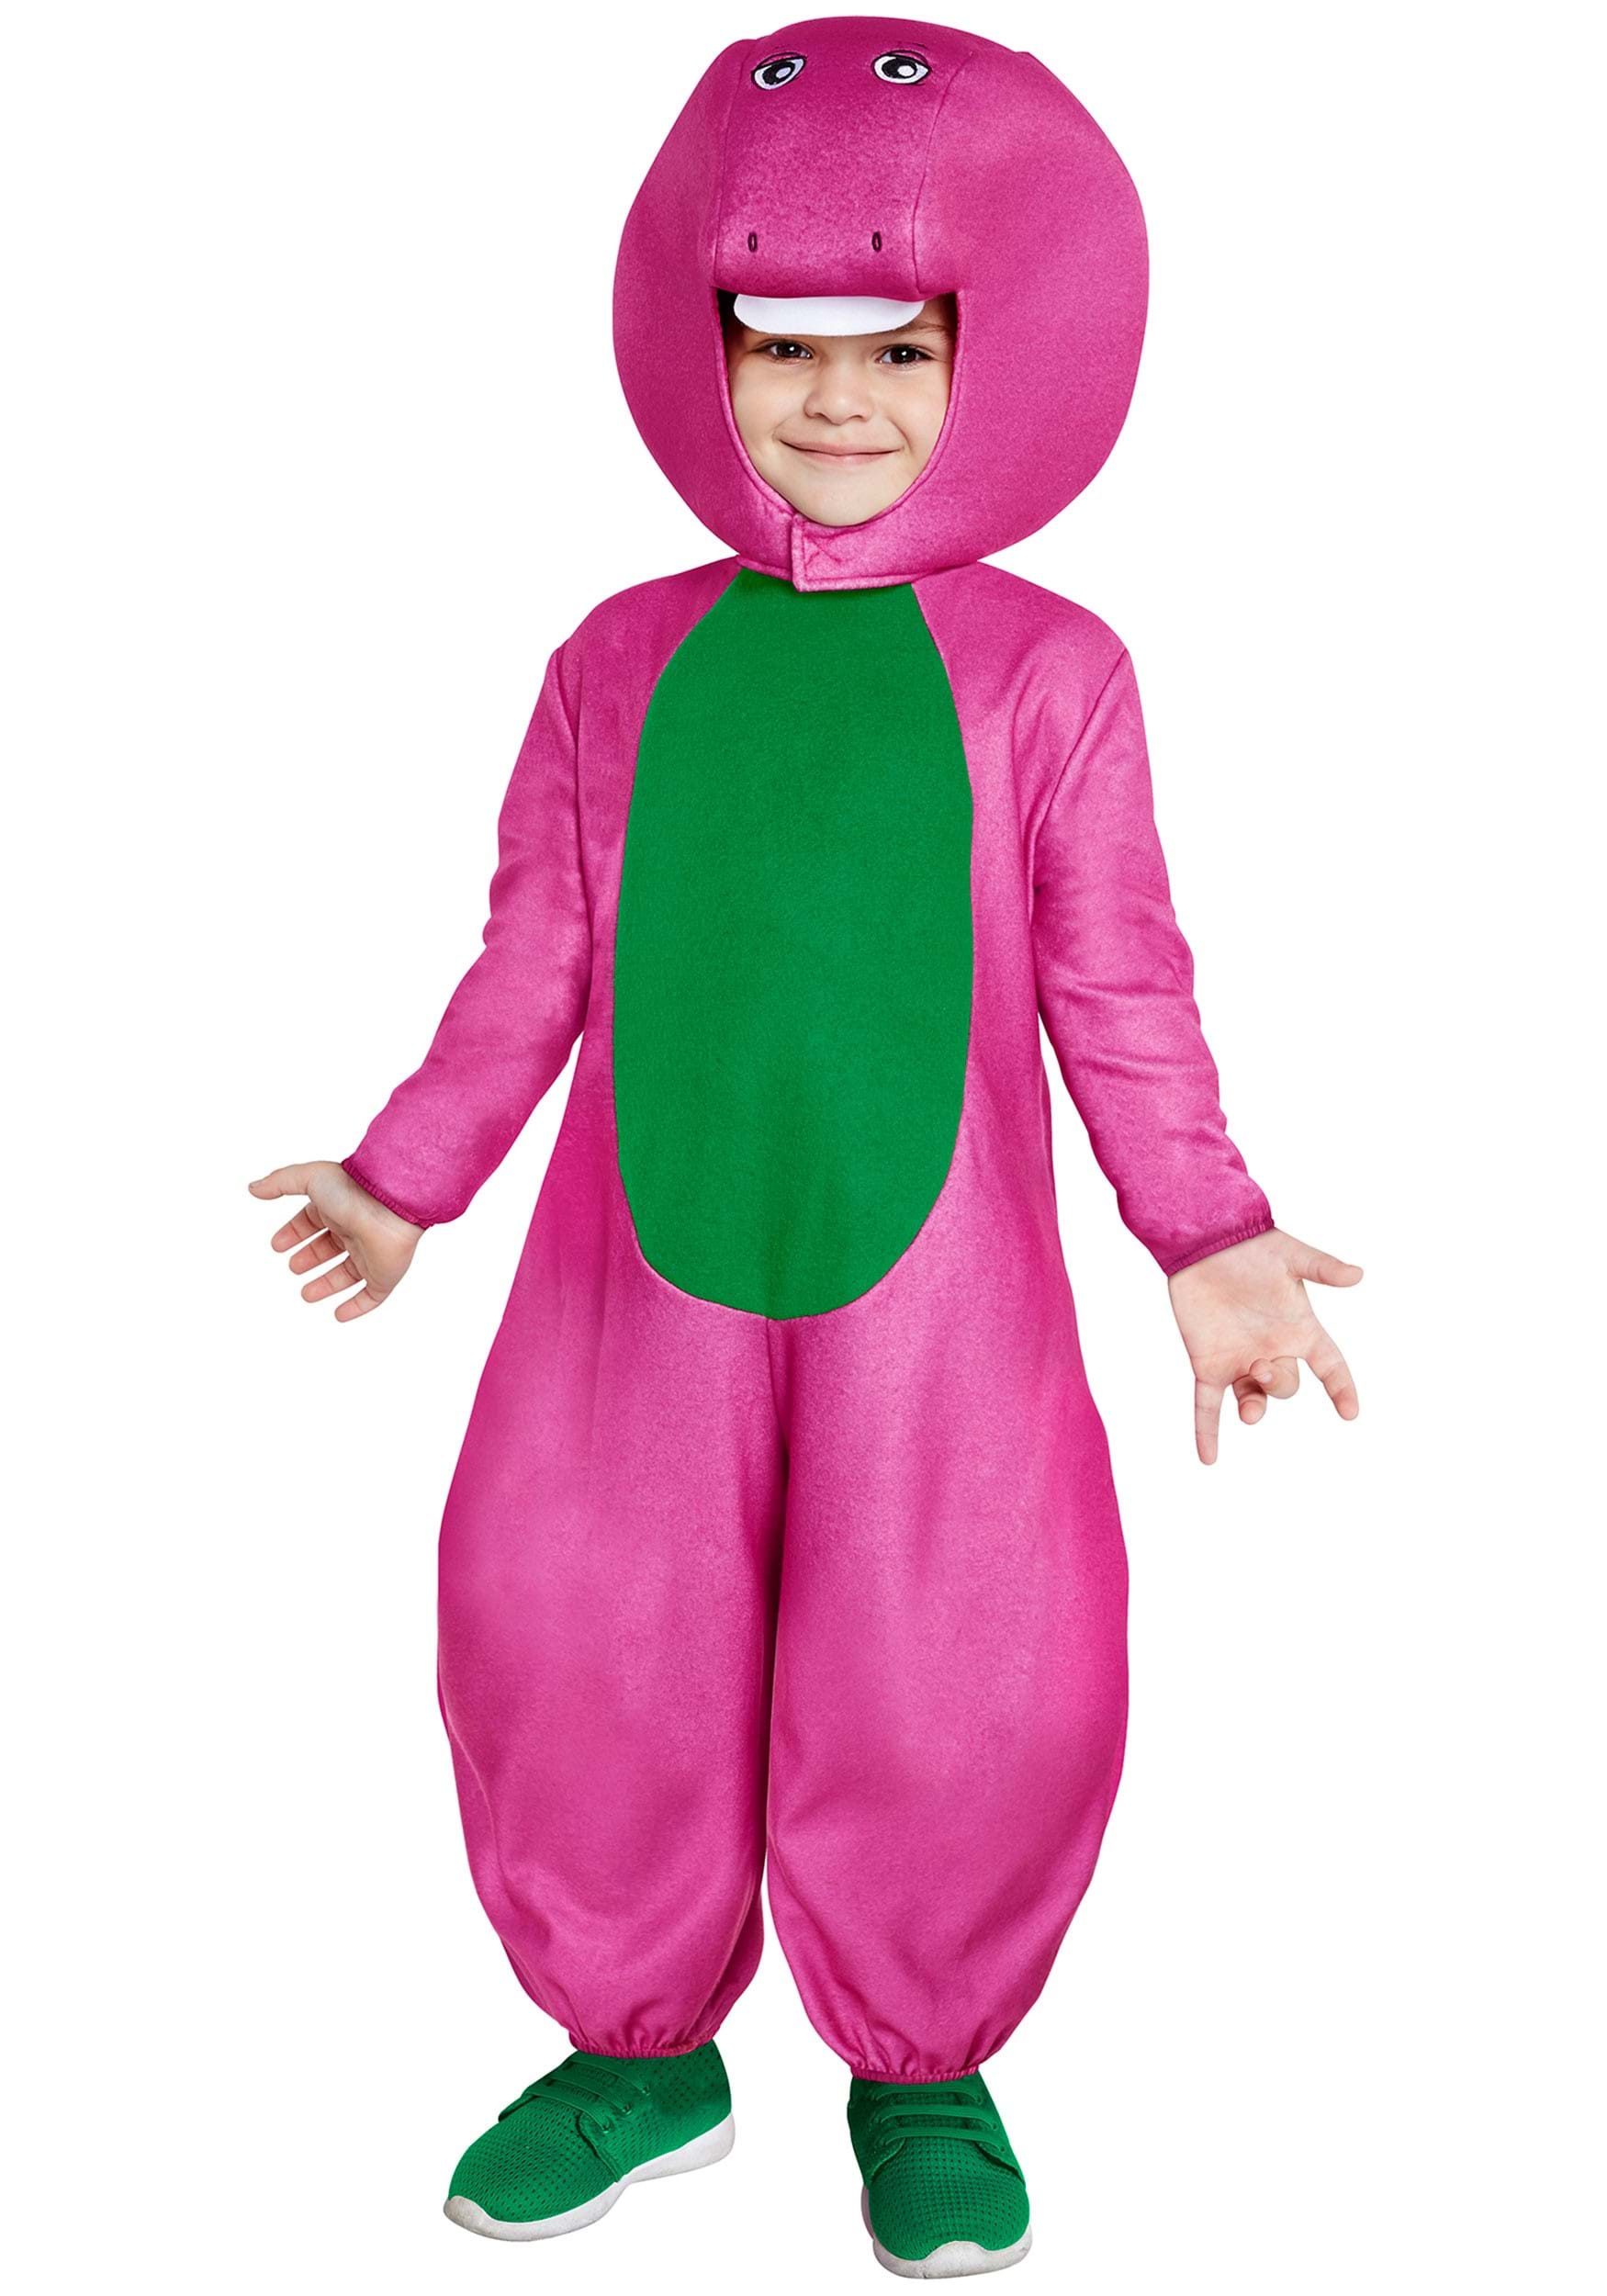 Toddler Barney the Dinosaur Costume | TV Show Costumes